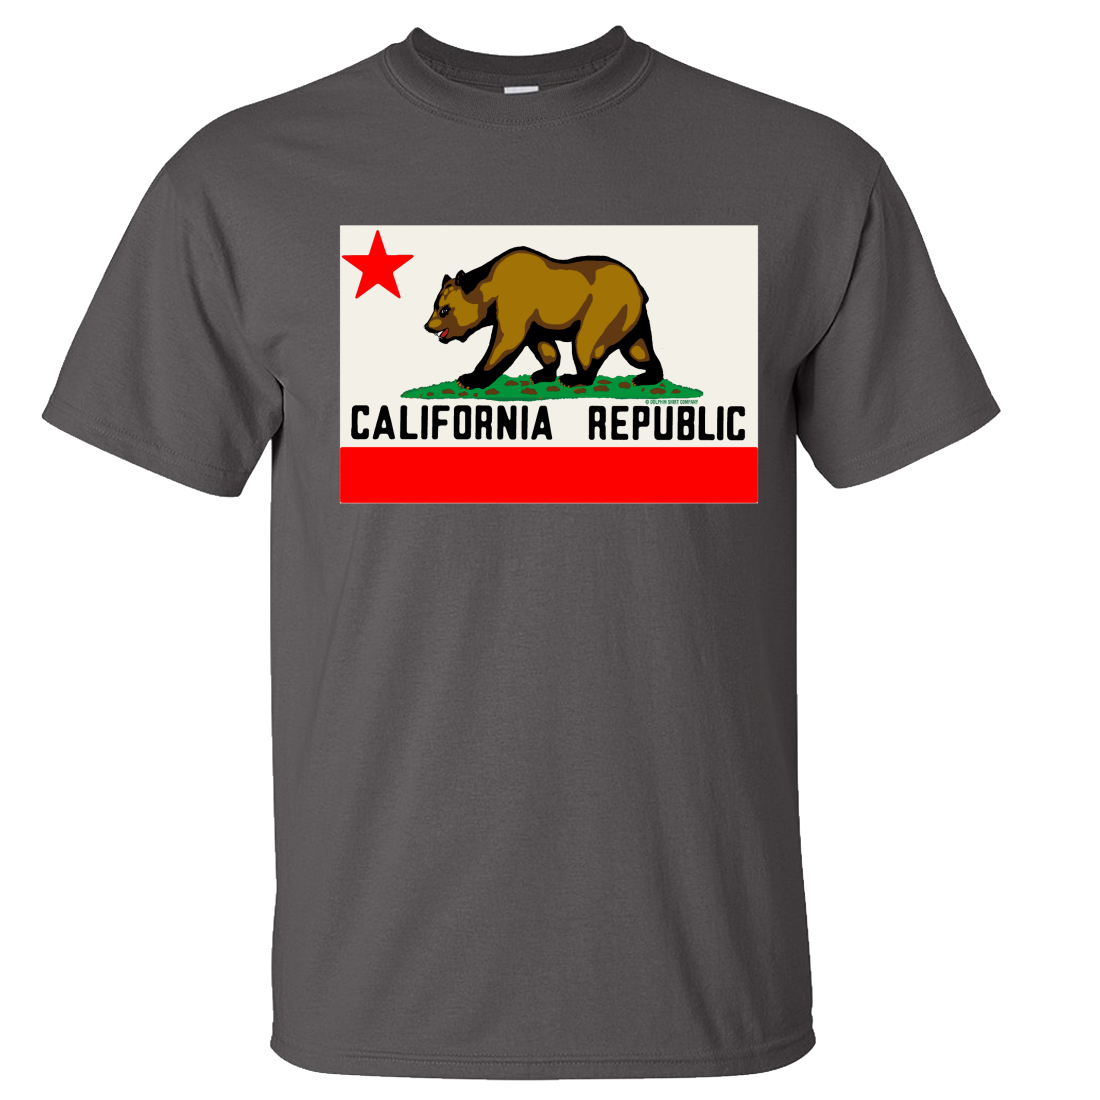 Elephant Ornate t-shirt design png - Buy t-shirt designs